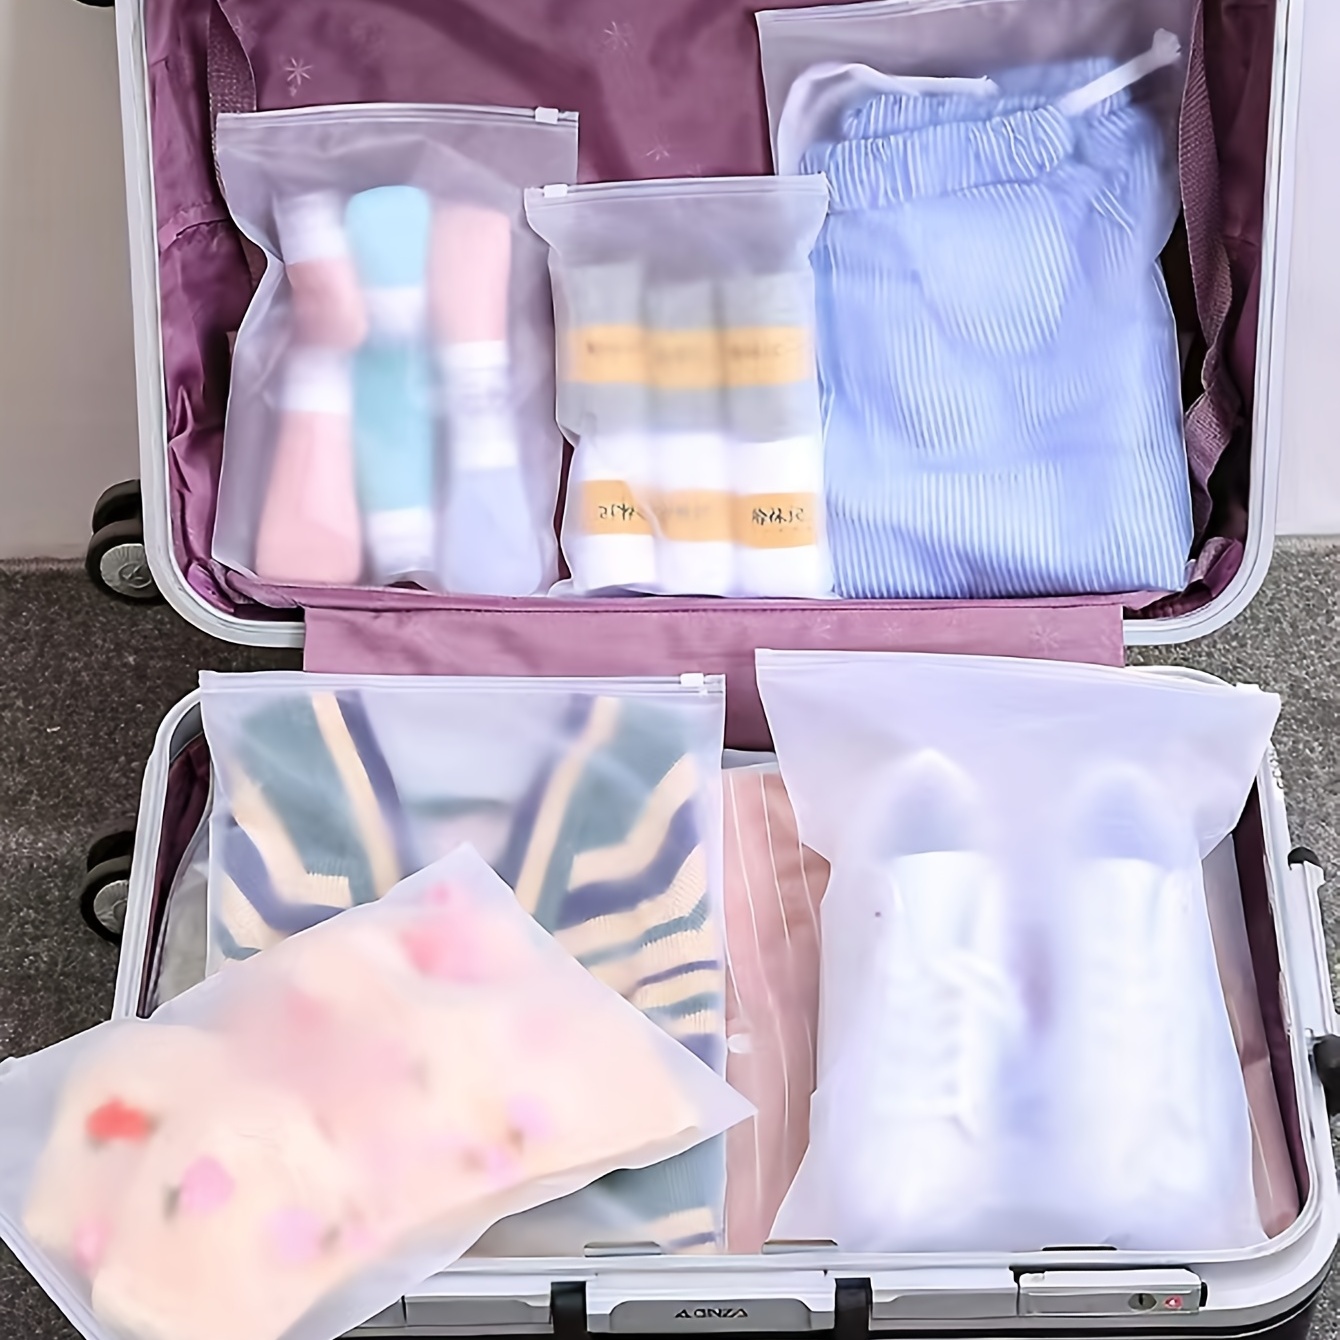 

7 Pcs Lightweight Translucent Storage Pouch, Clothes Bags For Travel, Versatile Organizers